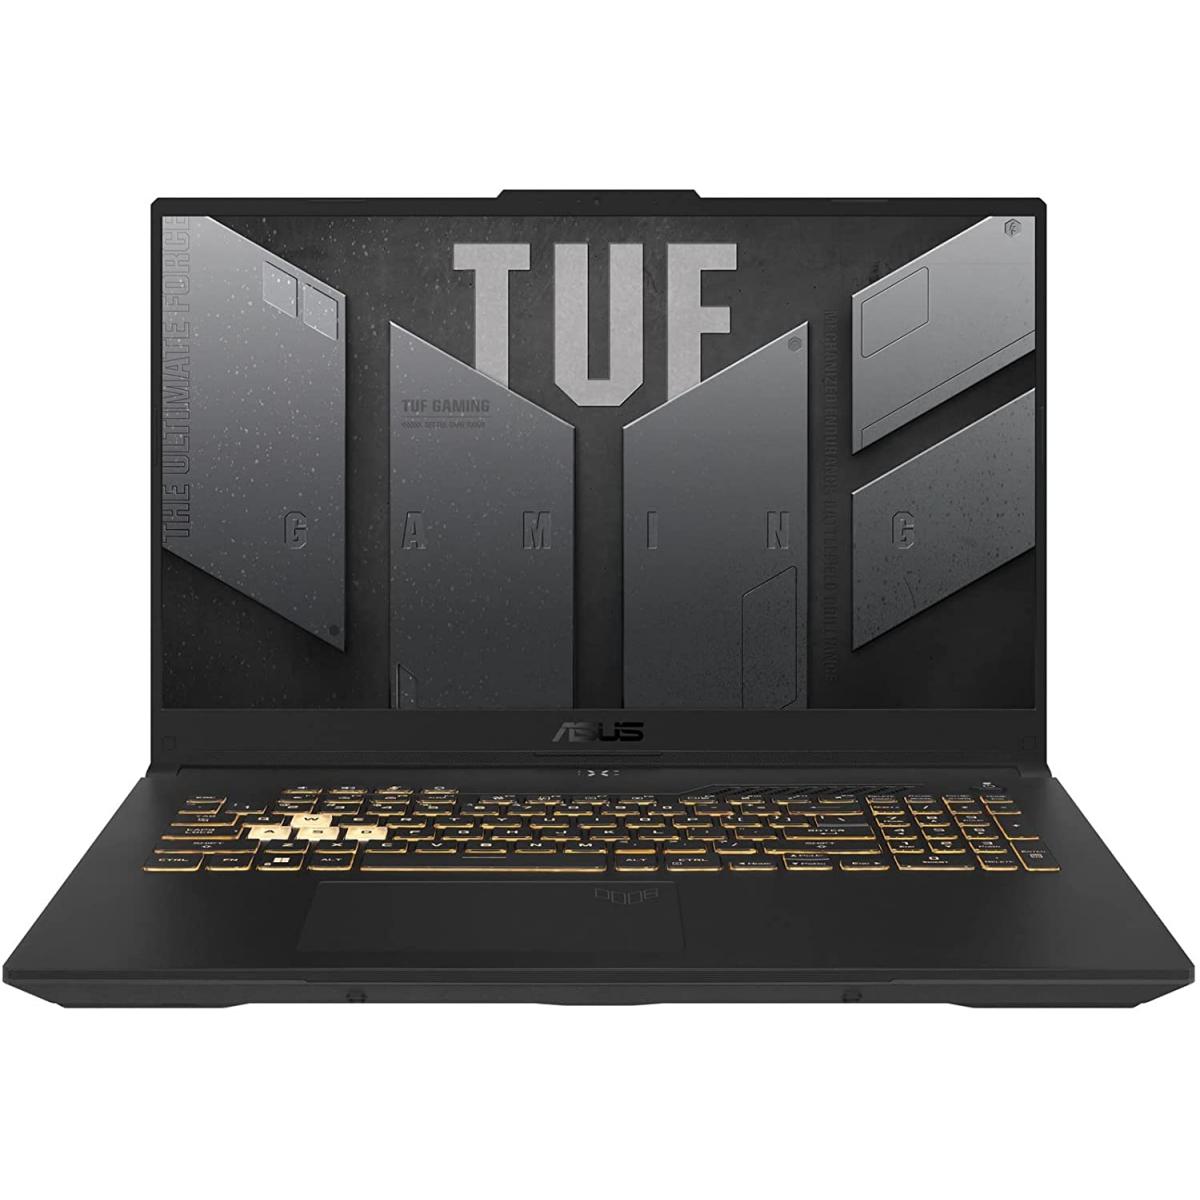 Laptop ASUS TUF Gaming F17 Core i7 12th Generation RTX 3060 6GB DDR6 144Hz 2022 Jaeger Gray